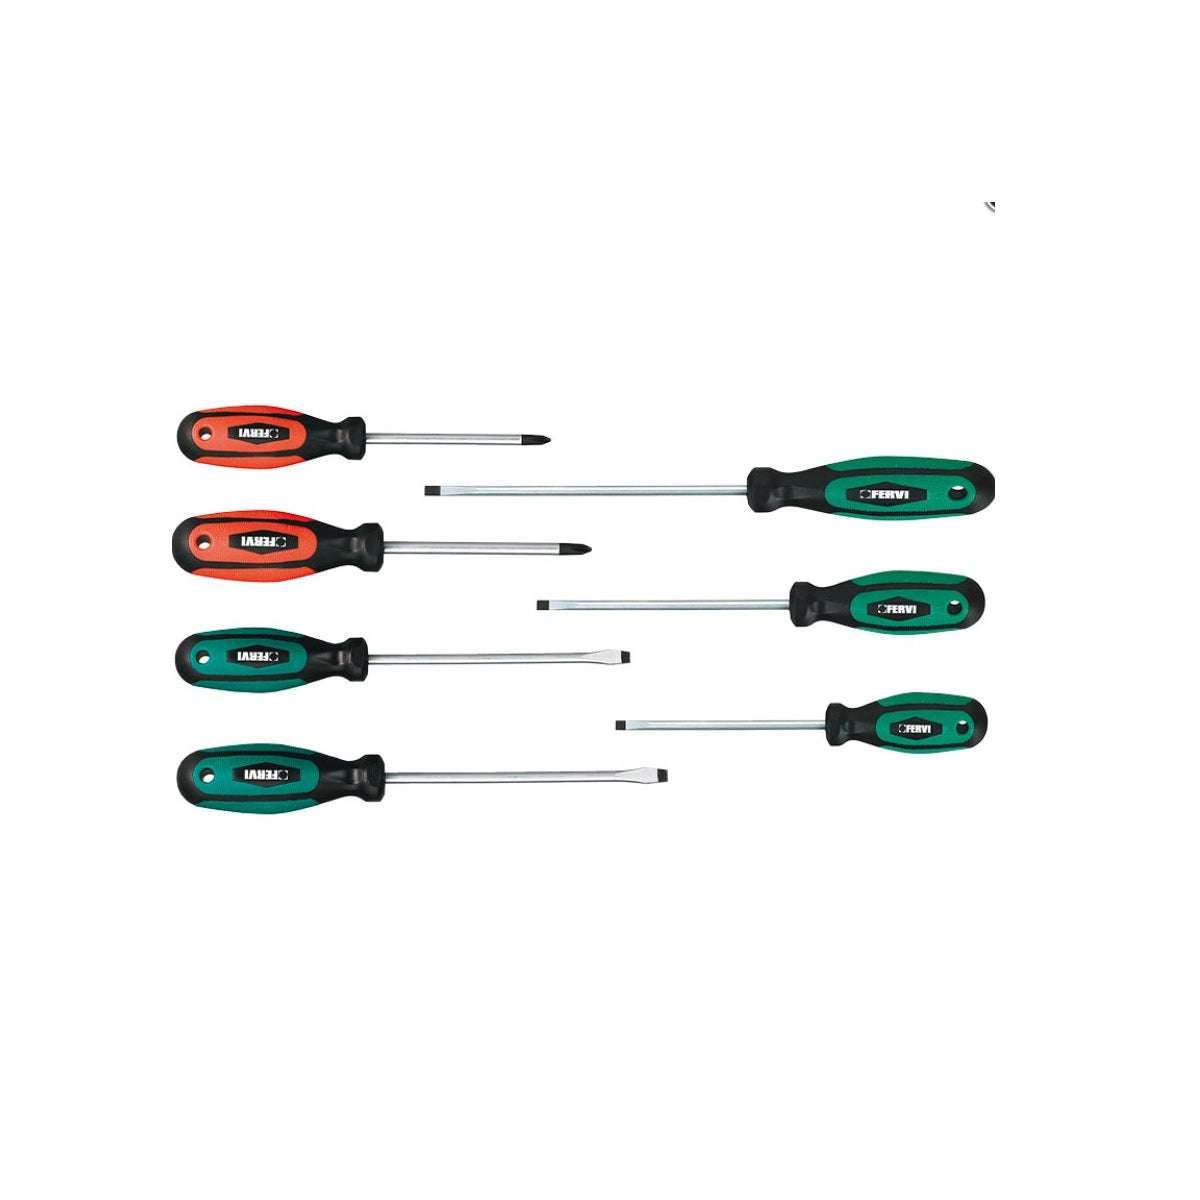 Set of 7 chrome-plated screwdrivers - Fervi 0880/307